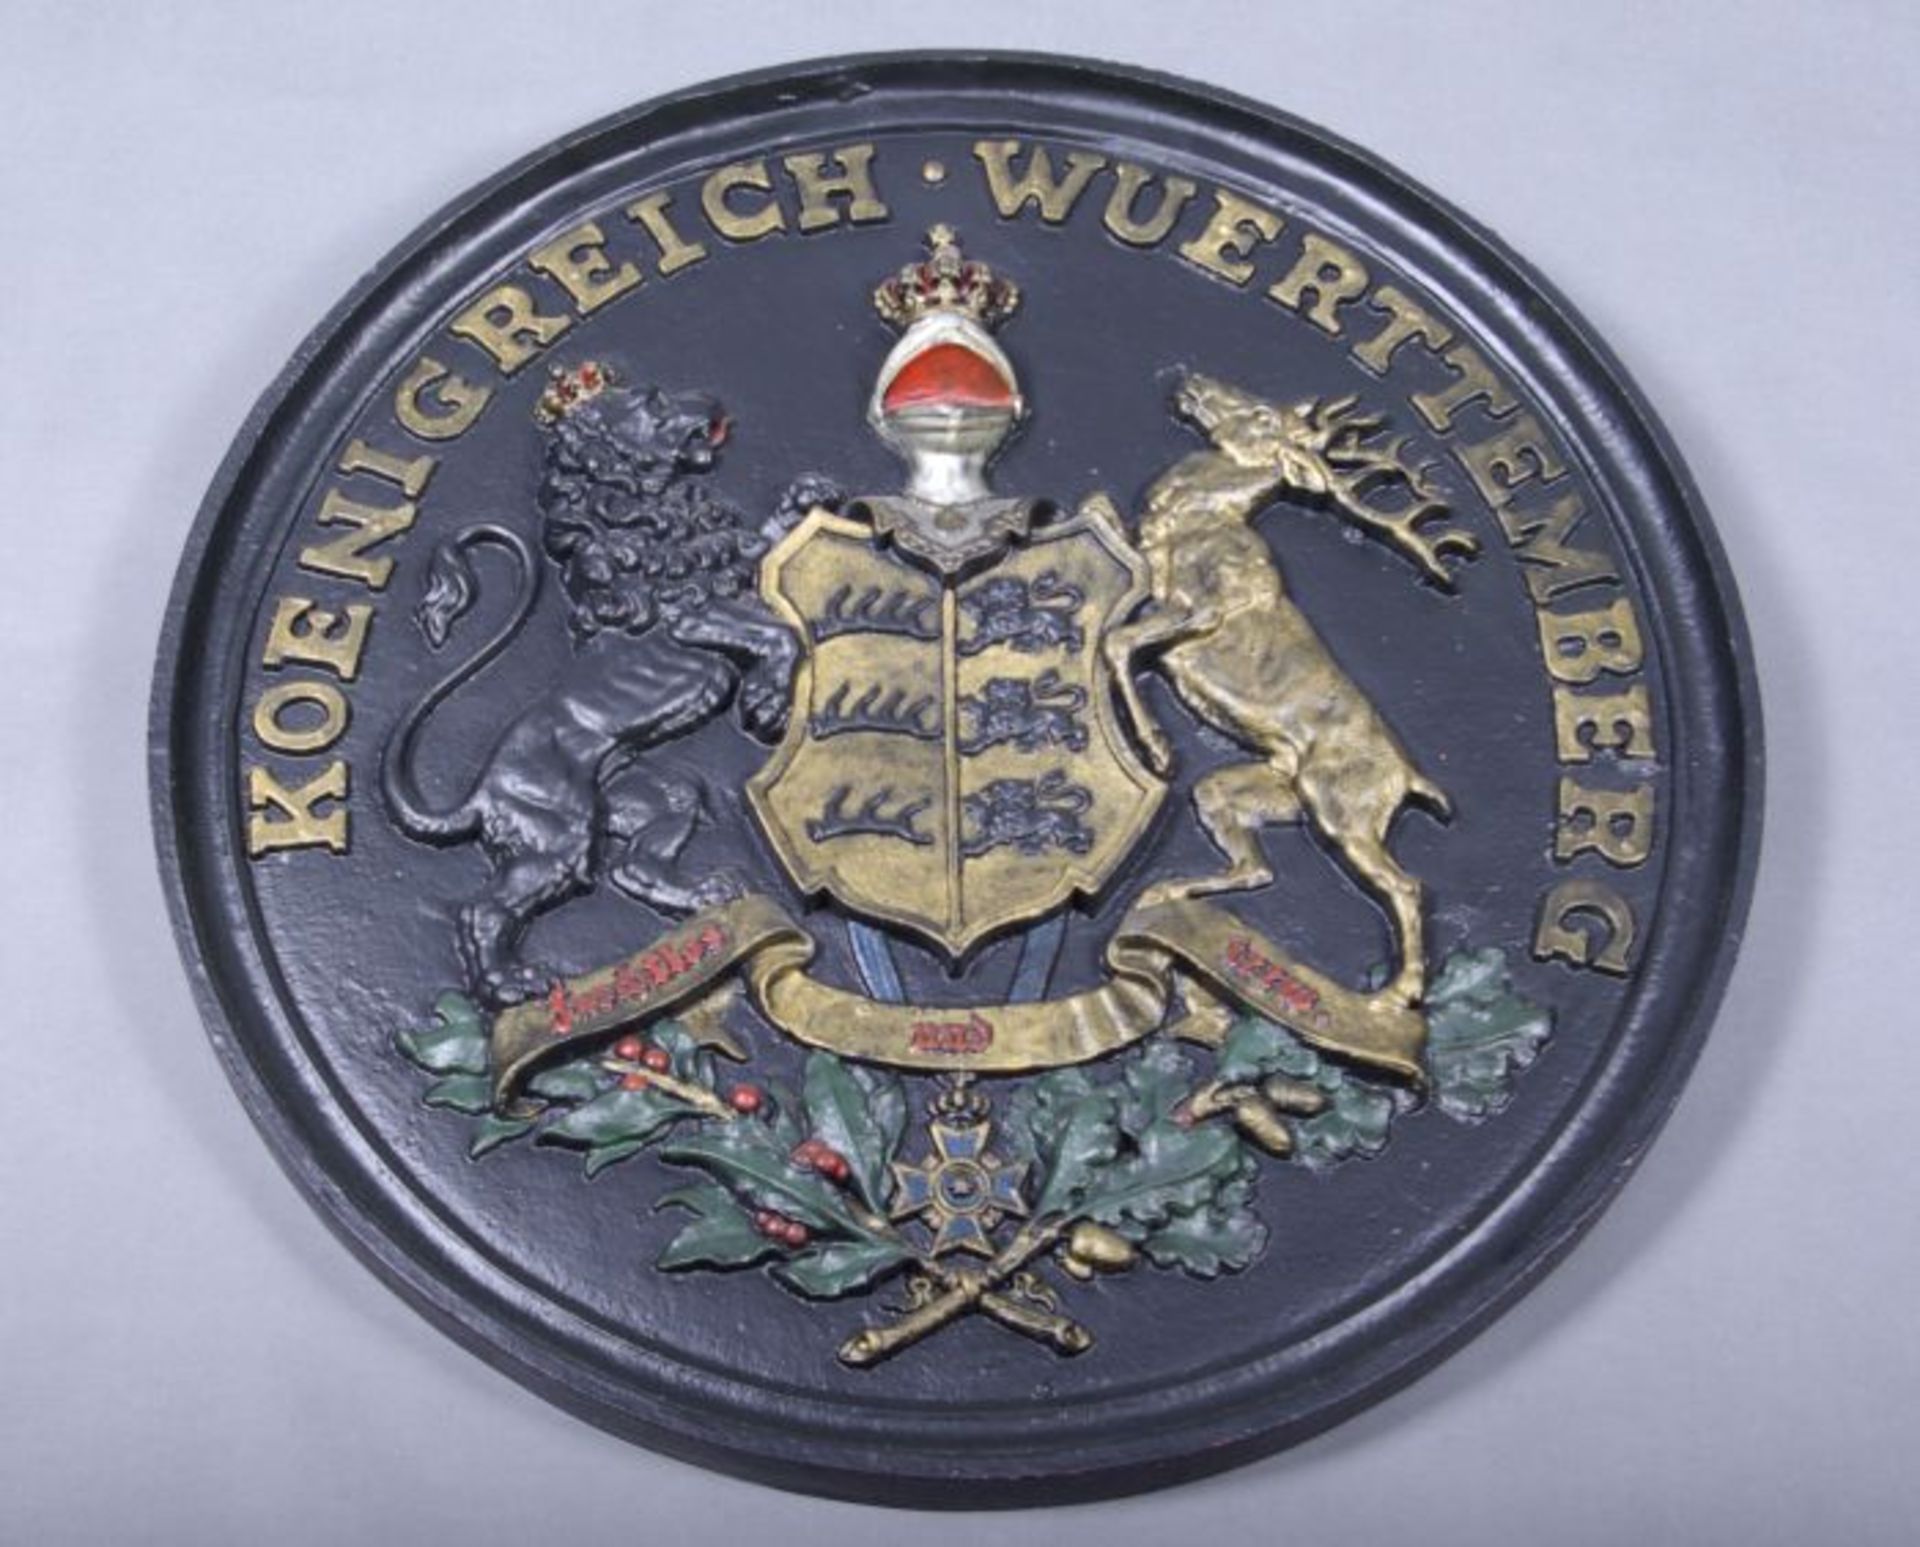 Großes Württemberger Wappendeutsch, 20.Jh., Rundform m. Württembergischem Wappen, oberh. bez. "